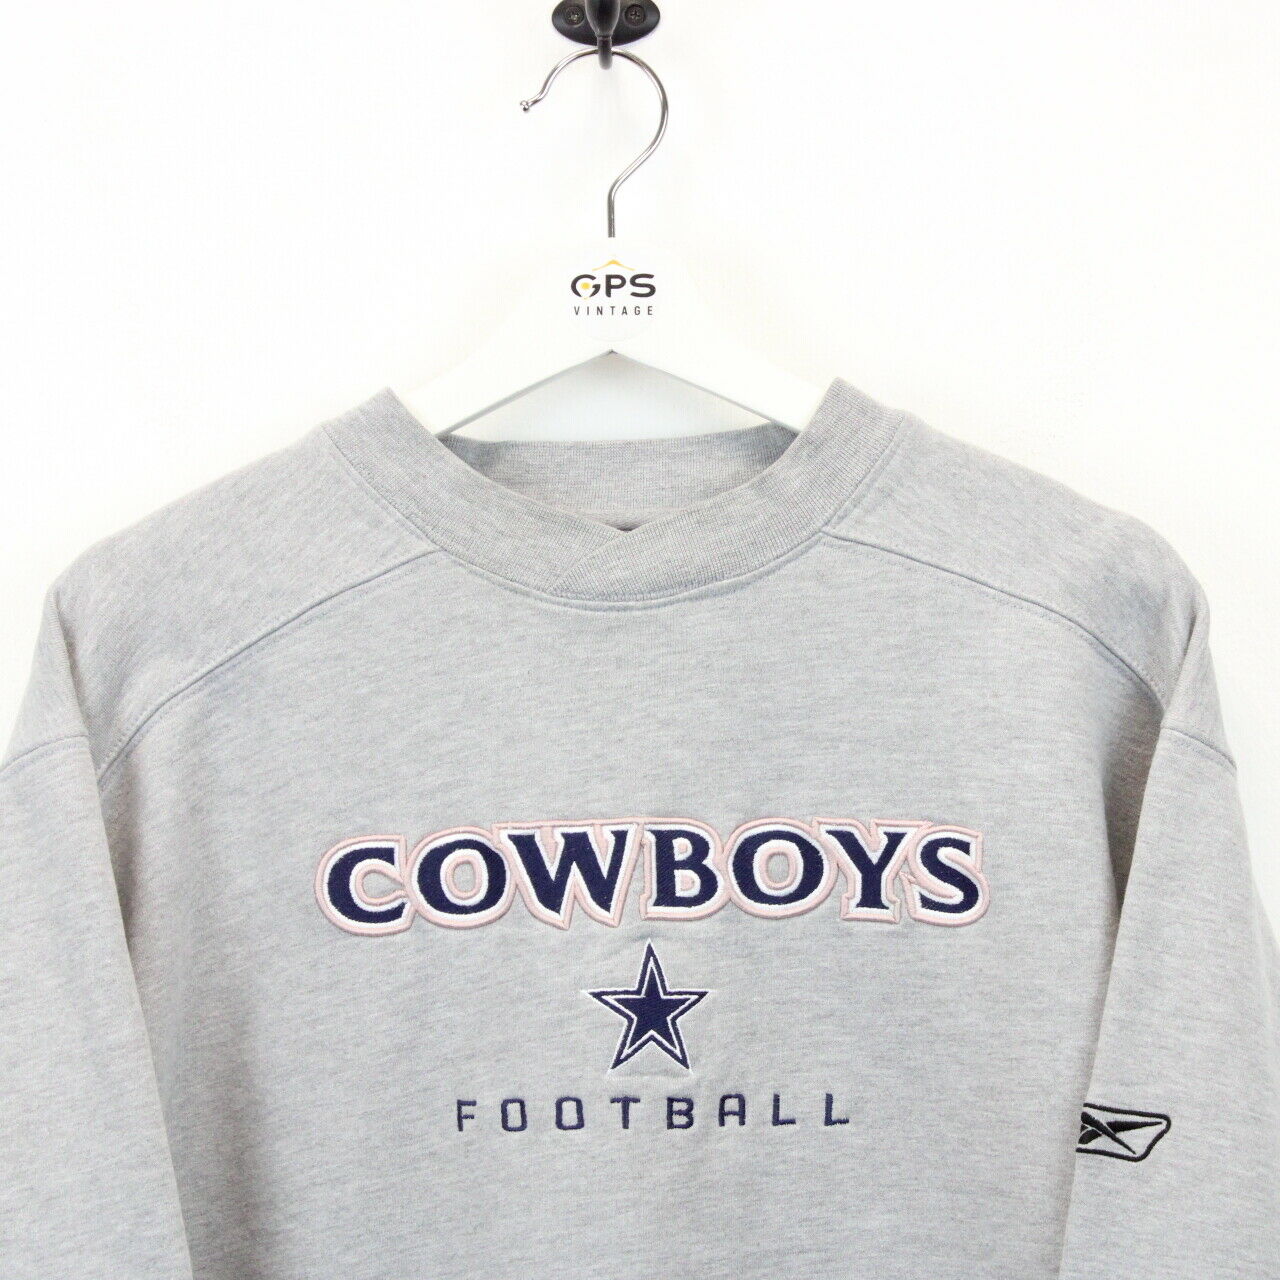 Dallas Cowboys Mens Gym Issue Screened Hoodie Sweatshirt by Reebok